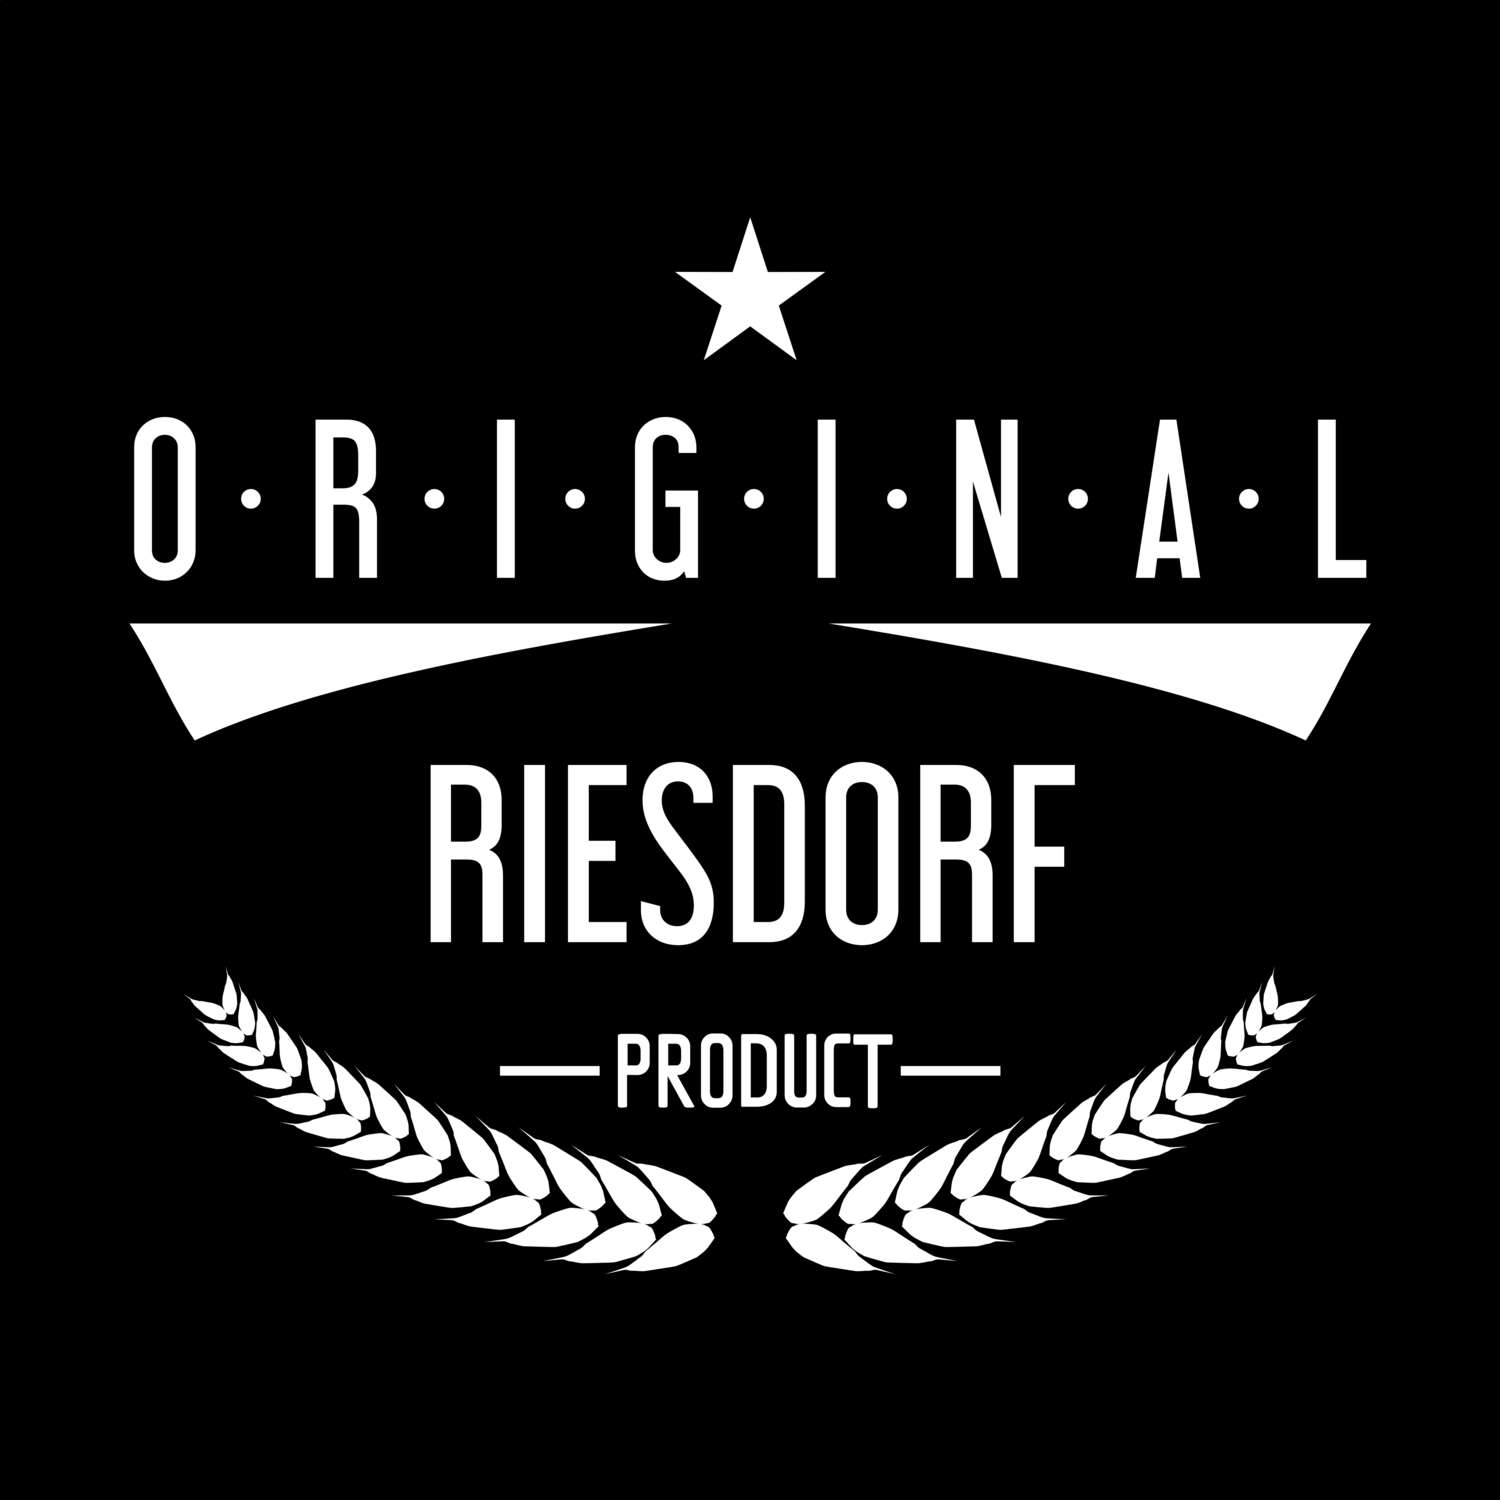 Riesdorf T-Shirt »Original Product«